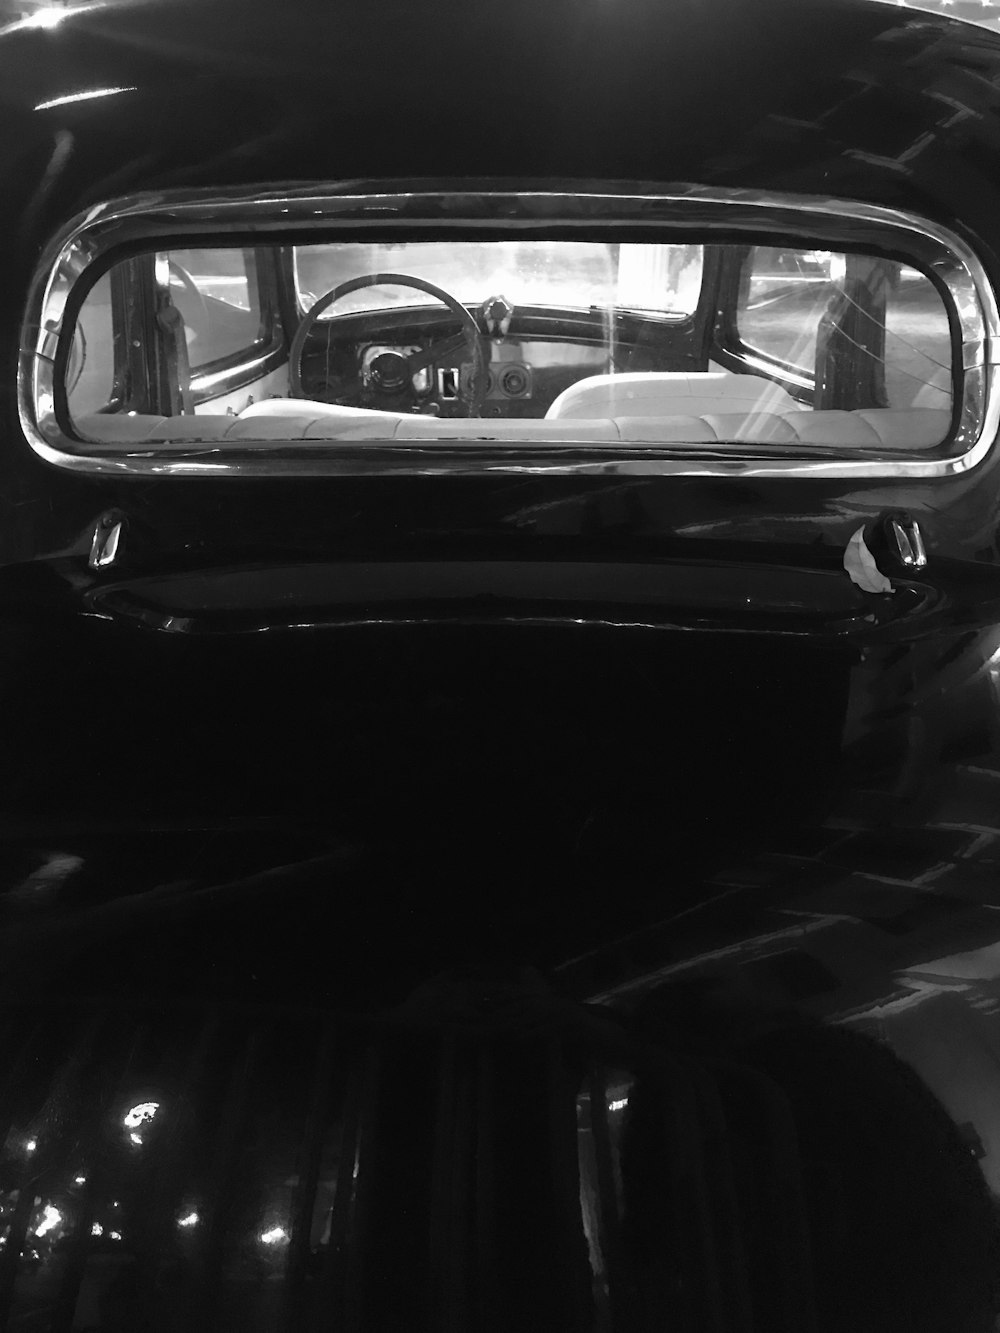 a close up of a car mirror on a car